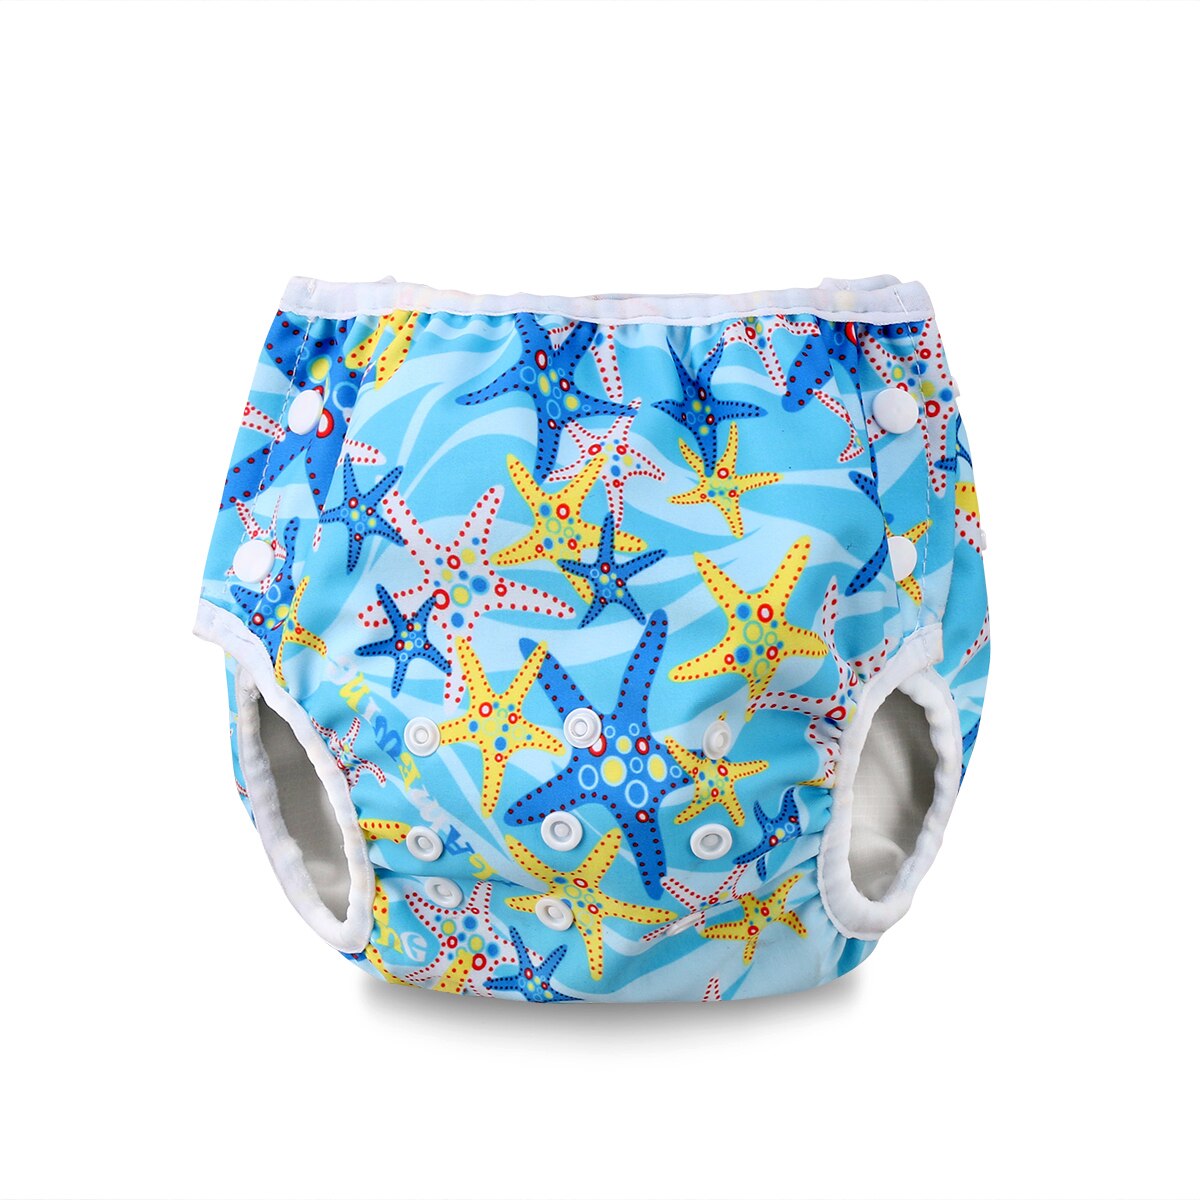 Goocheer baby svømmeble unisex svømmebukser til småbørn svømmebleer justerbar sommer badetøj til børn poolbukser: 5